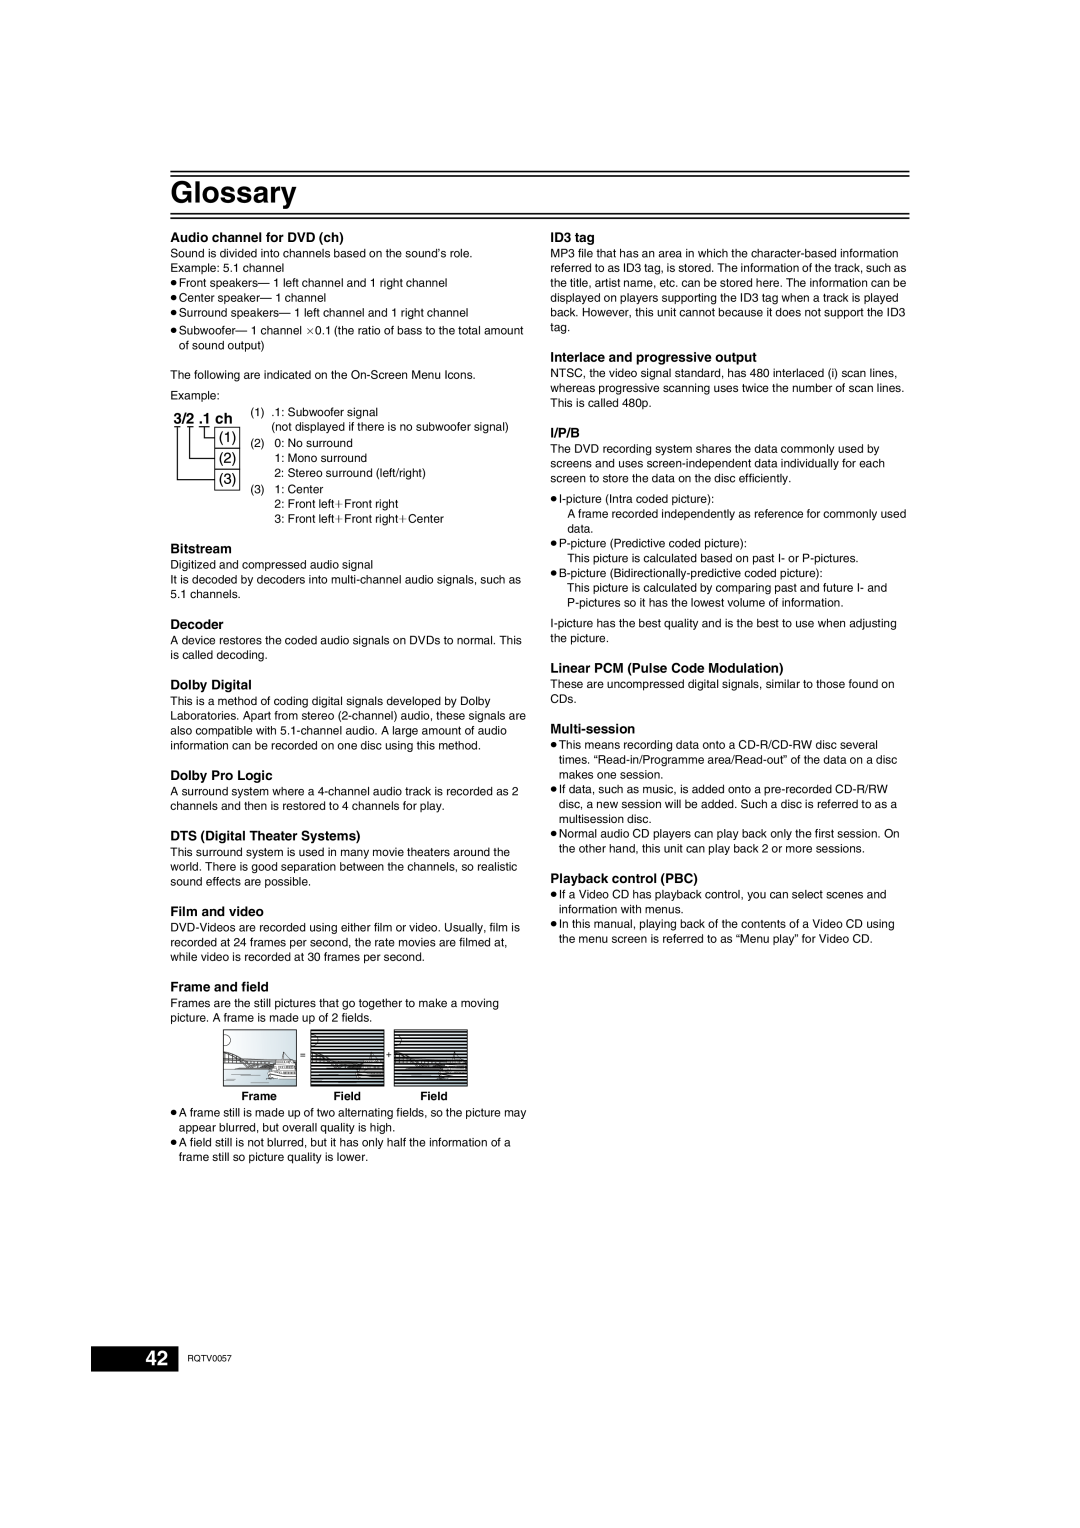 Panasonic NV-VP33 Series Glossary, 3/2 .1 ch, Audio channel for DVD ch, Bitstream, Decoder, Dolby Digital, Dolby Pro Logic 